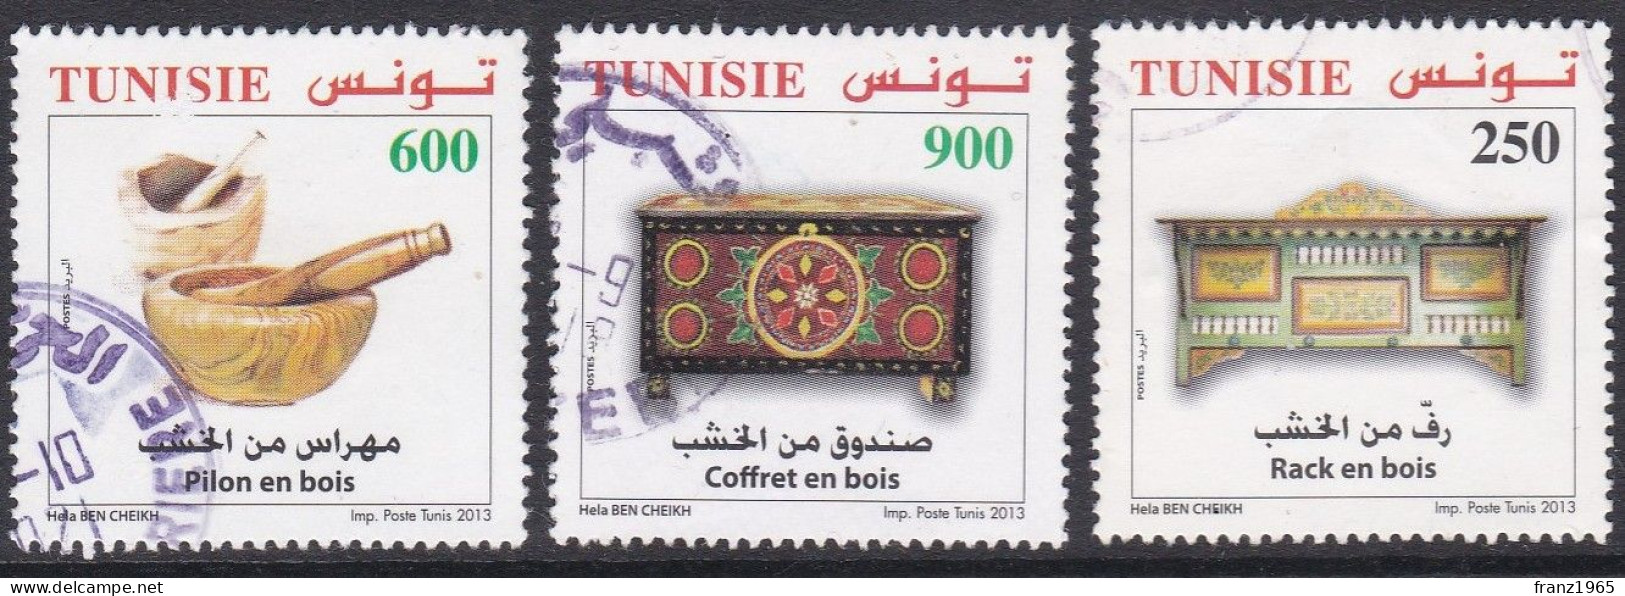 Woodcraft - 2013 - Tunisia (1956-...)